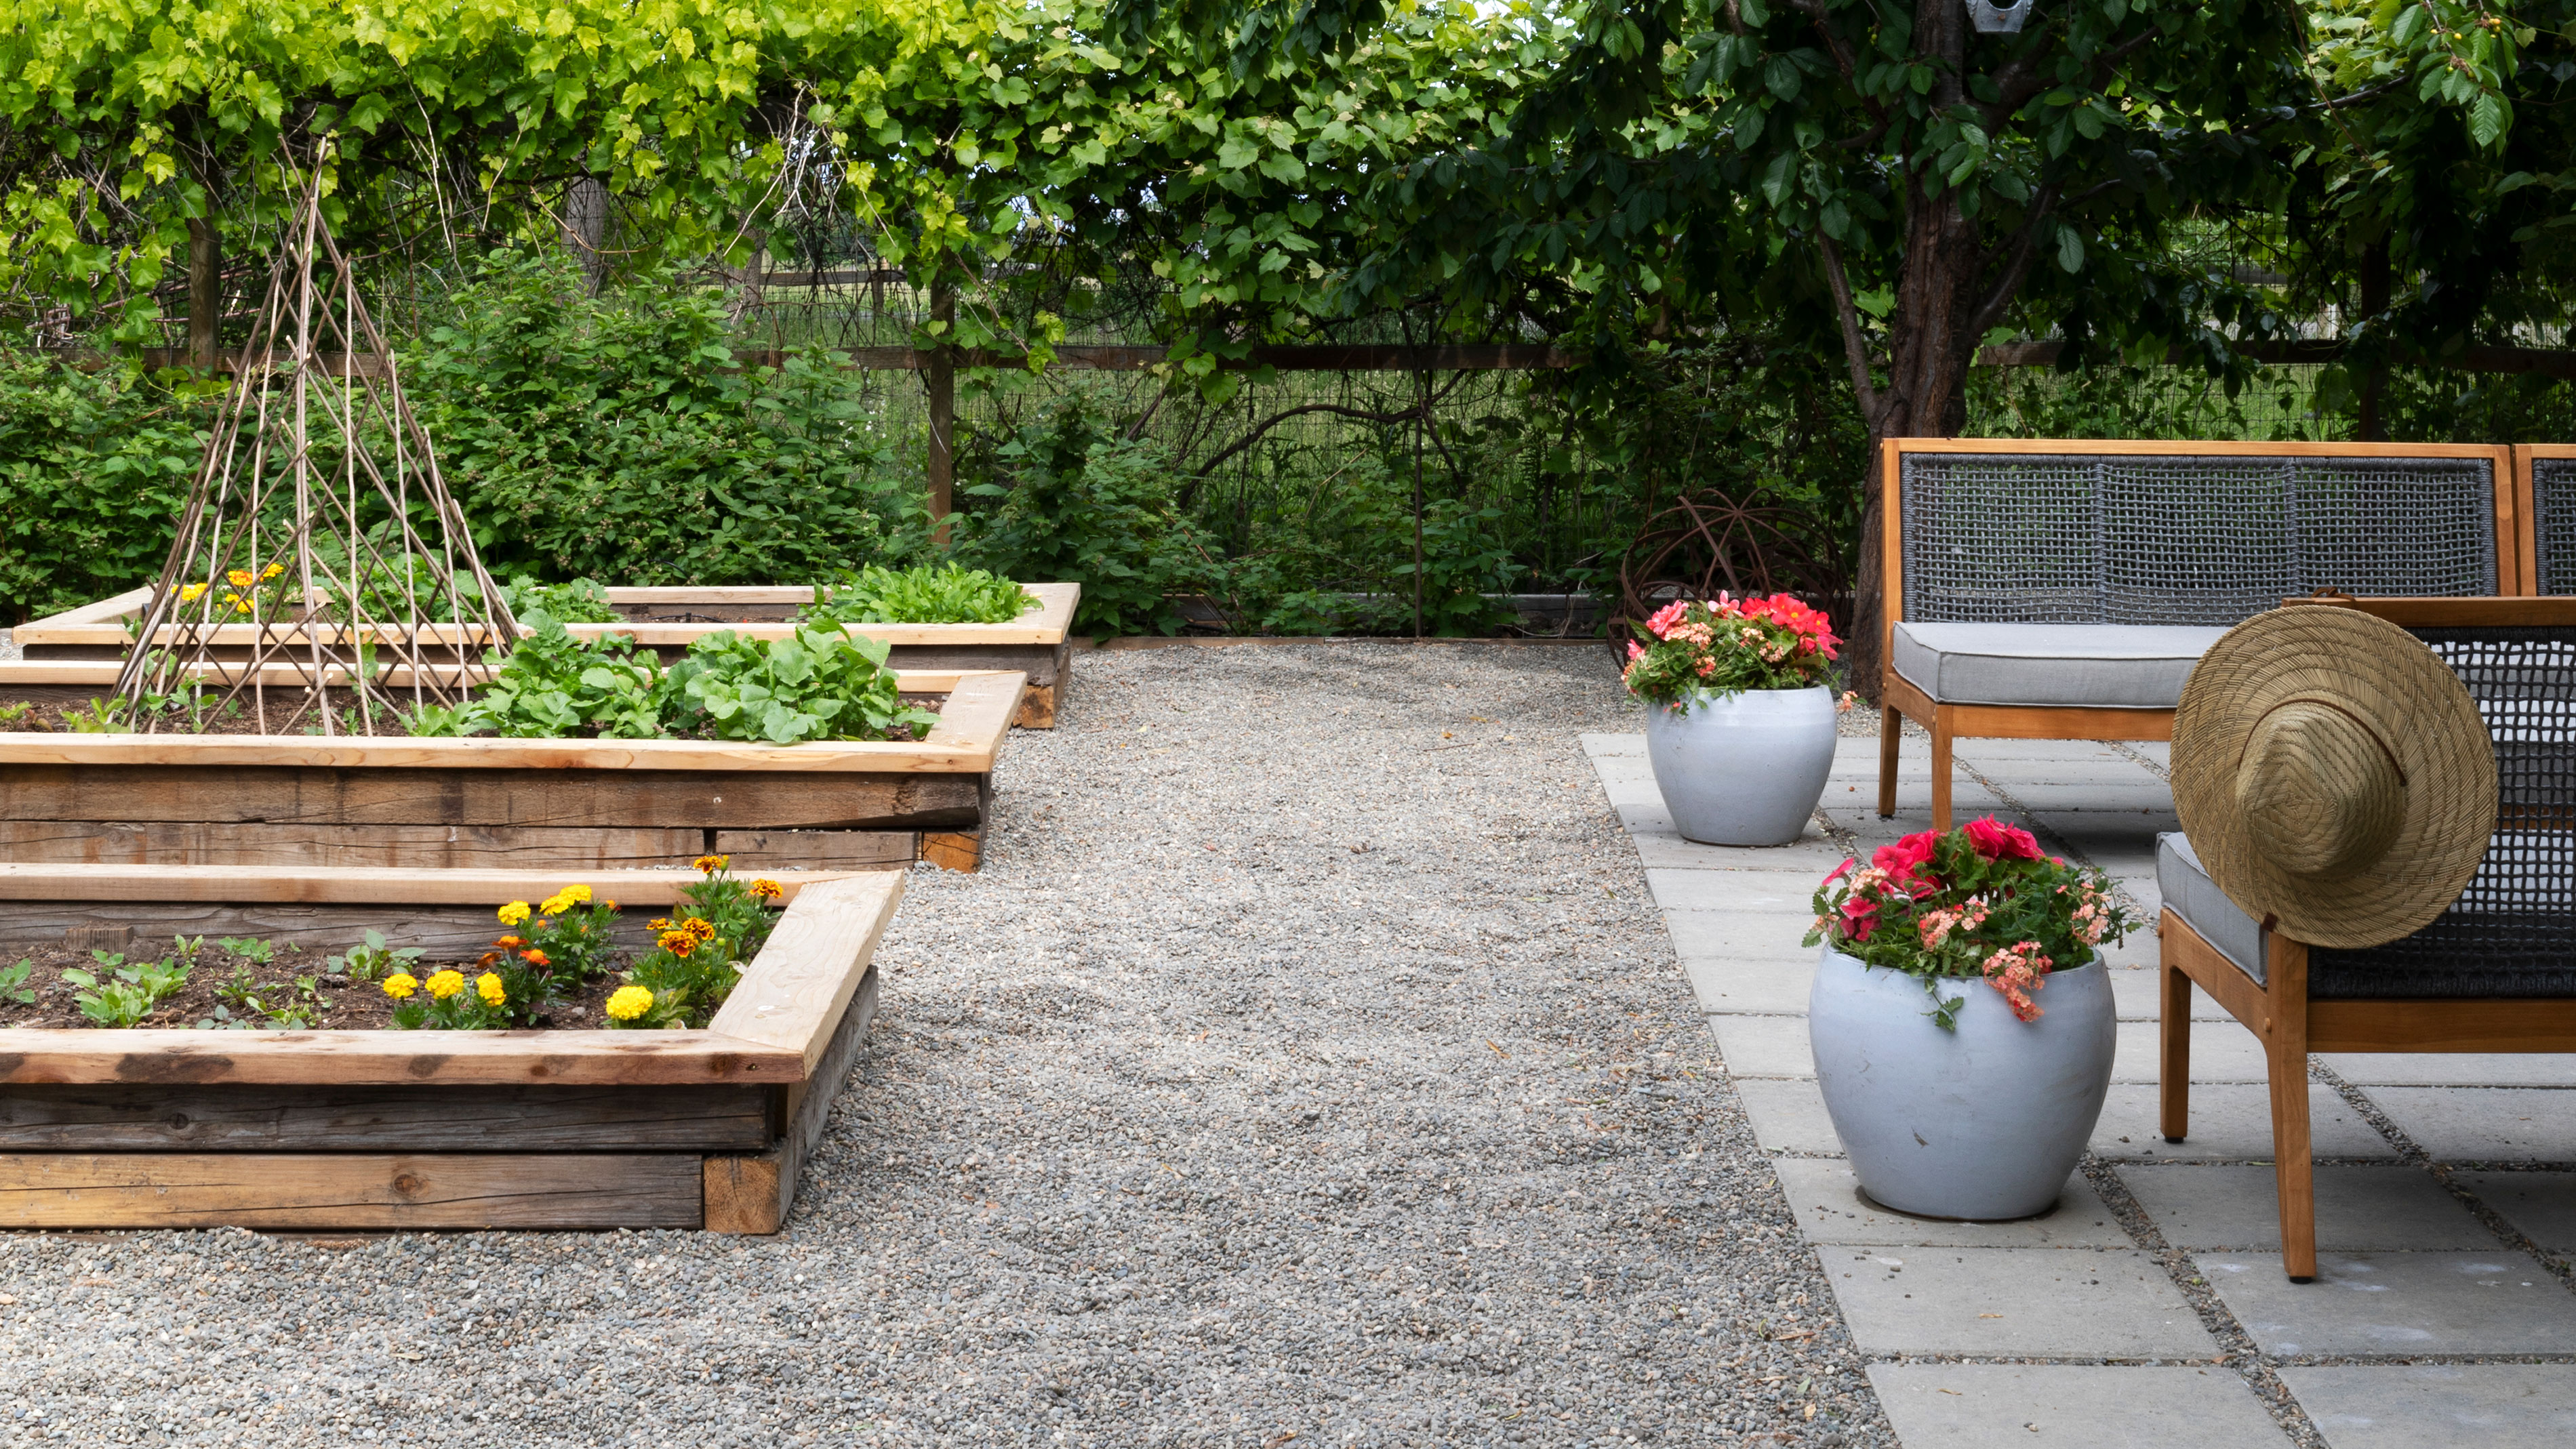 Backyard ideas on a budget Create an outdoor retreat for less ...